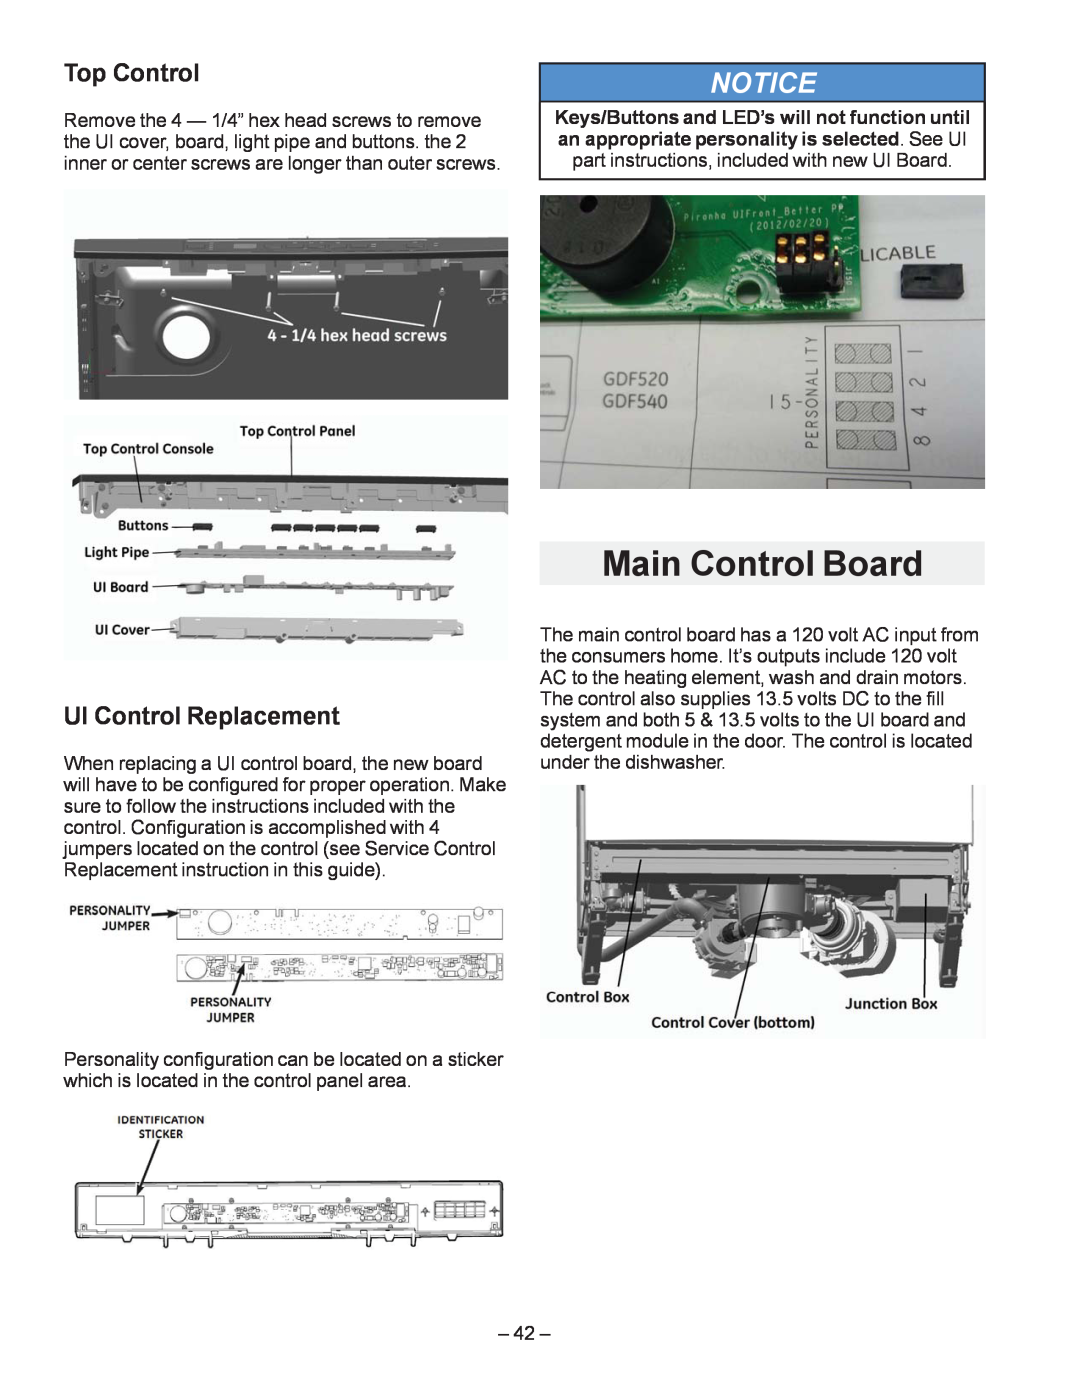 GE GDF520PGD, GDF540HGD, GDF510PGD, GDT530PGD manual Main Control Board, Top Control, UI Control Replacement, ±  ±, Notice 